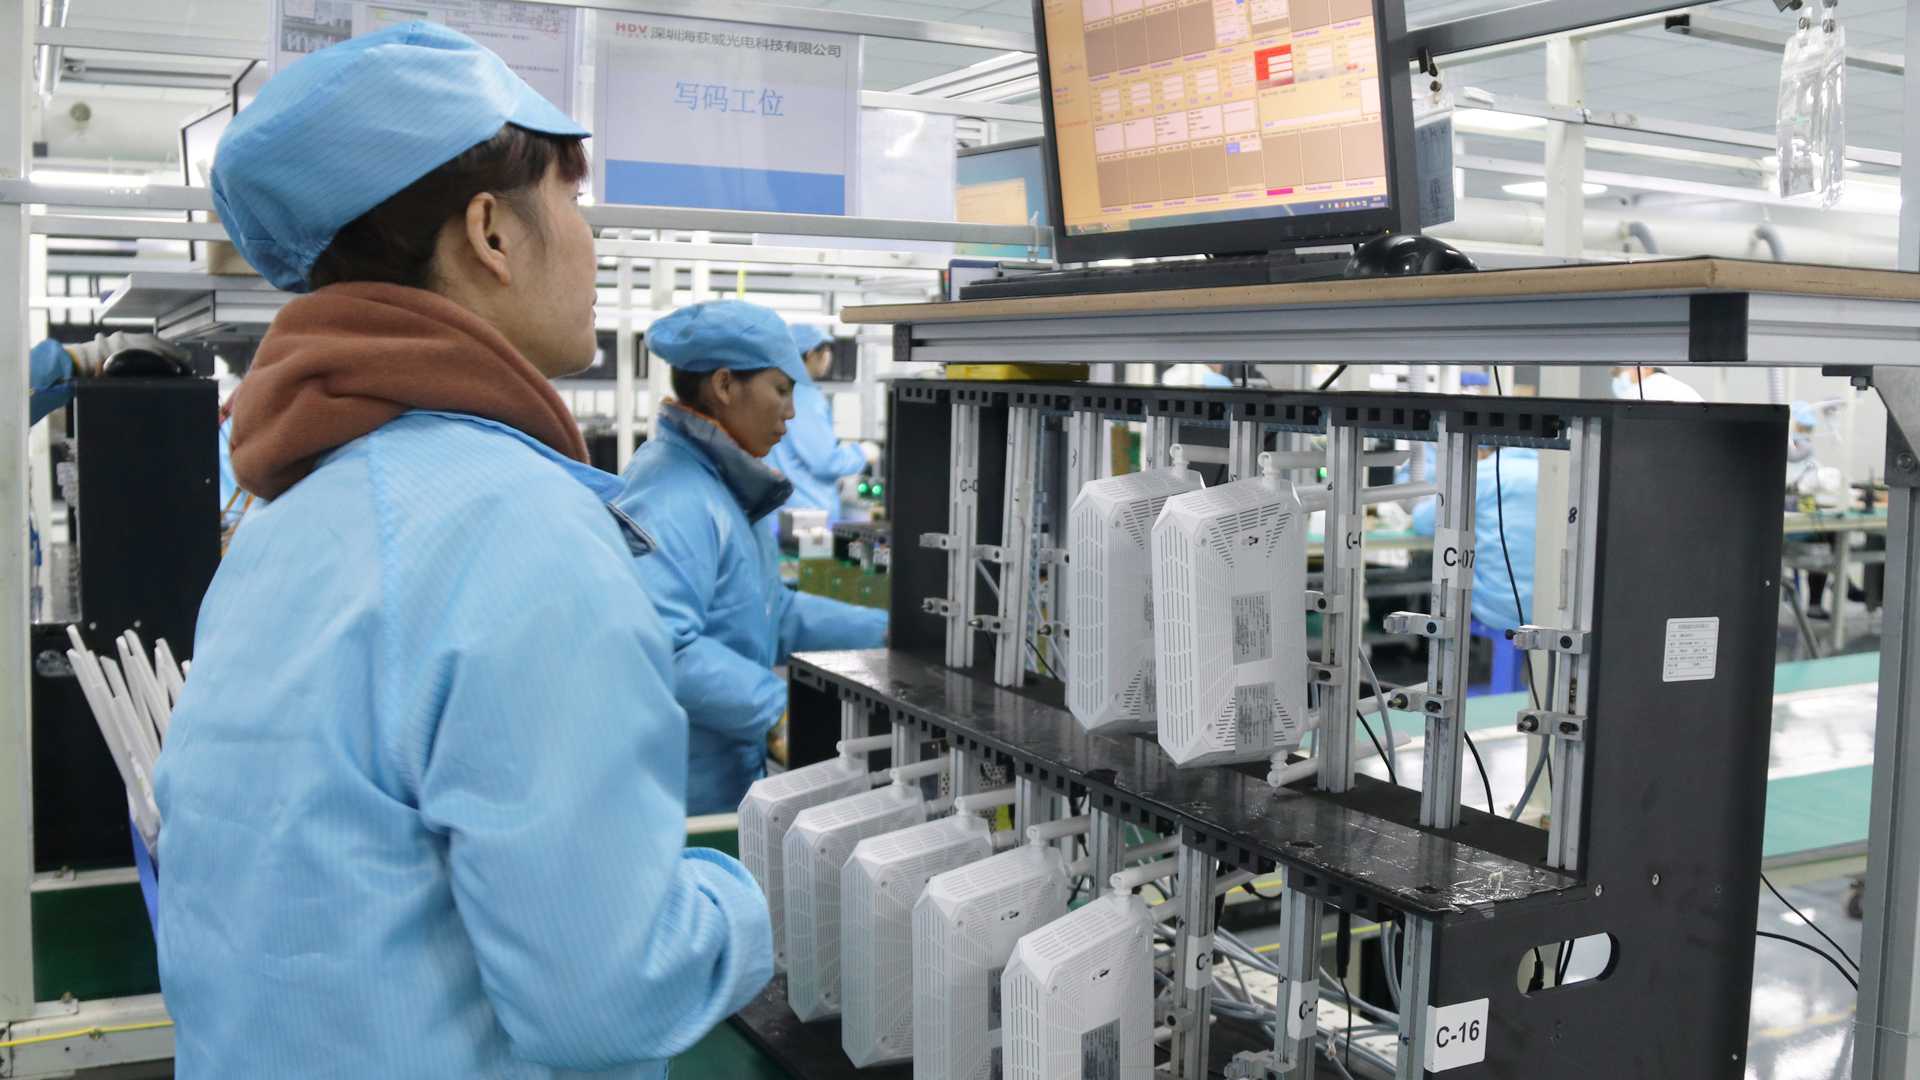 Shenzhen HDV Photoelectron Technology Ltd.